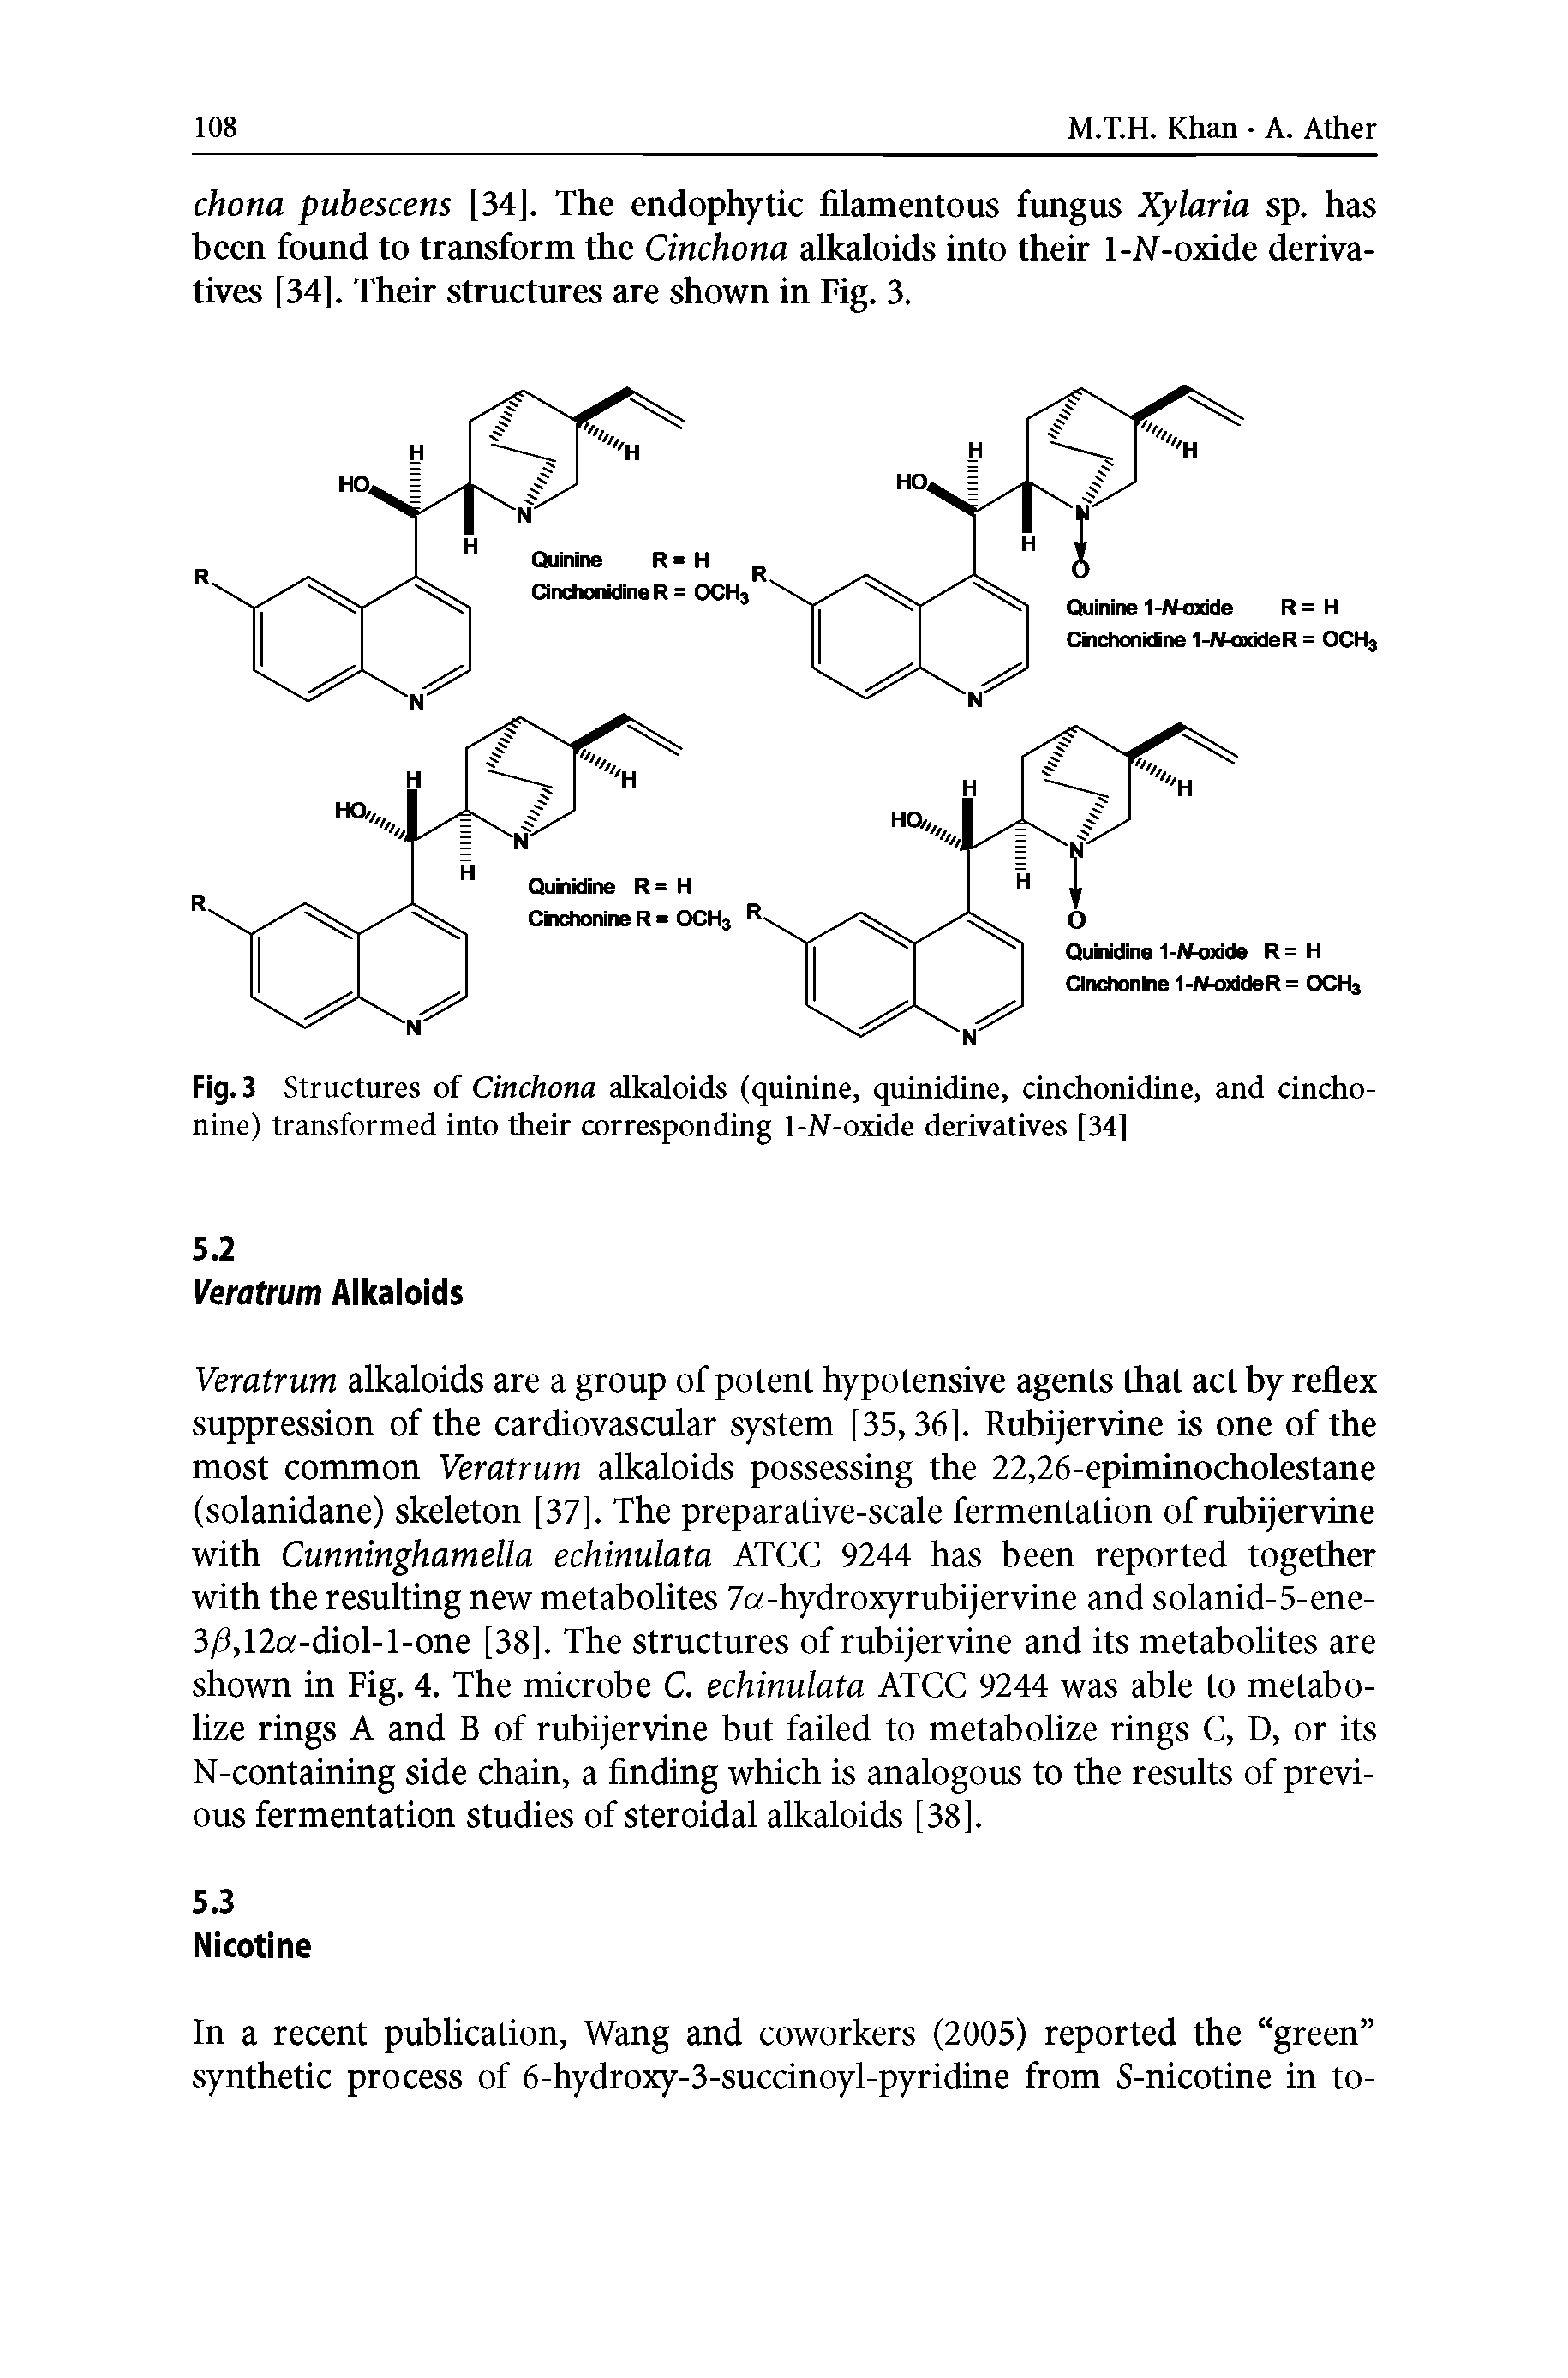 Fig. 3 Structiu-es of Cinchona alkaloids (quinine, quinidine, cinchonidine, and cinchonine) transformed into their corresponding 1-N-oxide derivatives [34]...